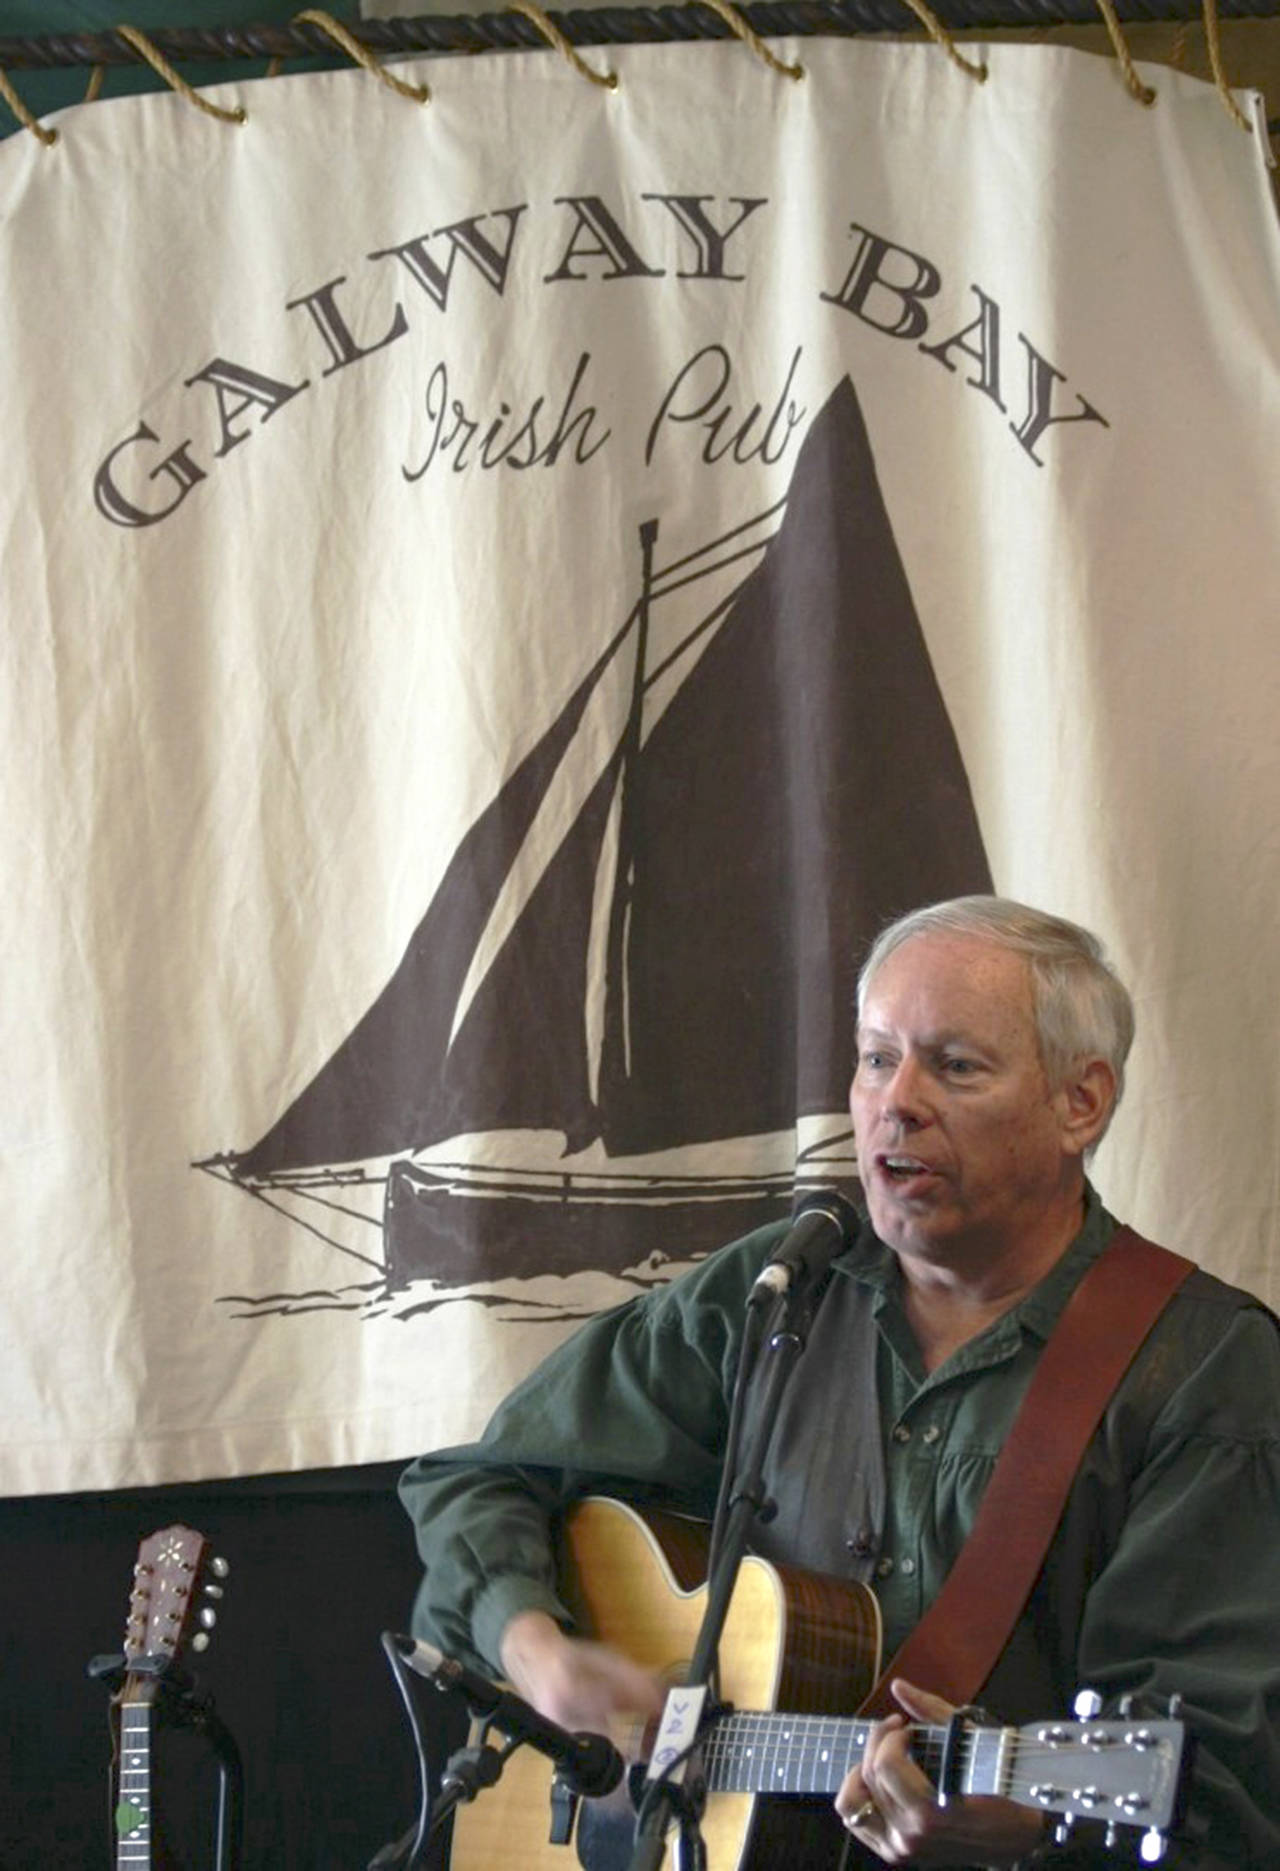 (Courtesy photo) Hank Cramer performs at Galway Bay.